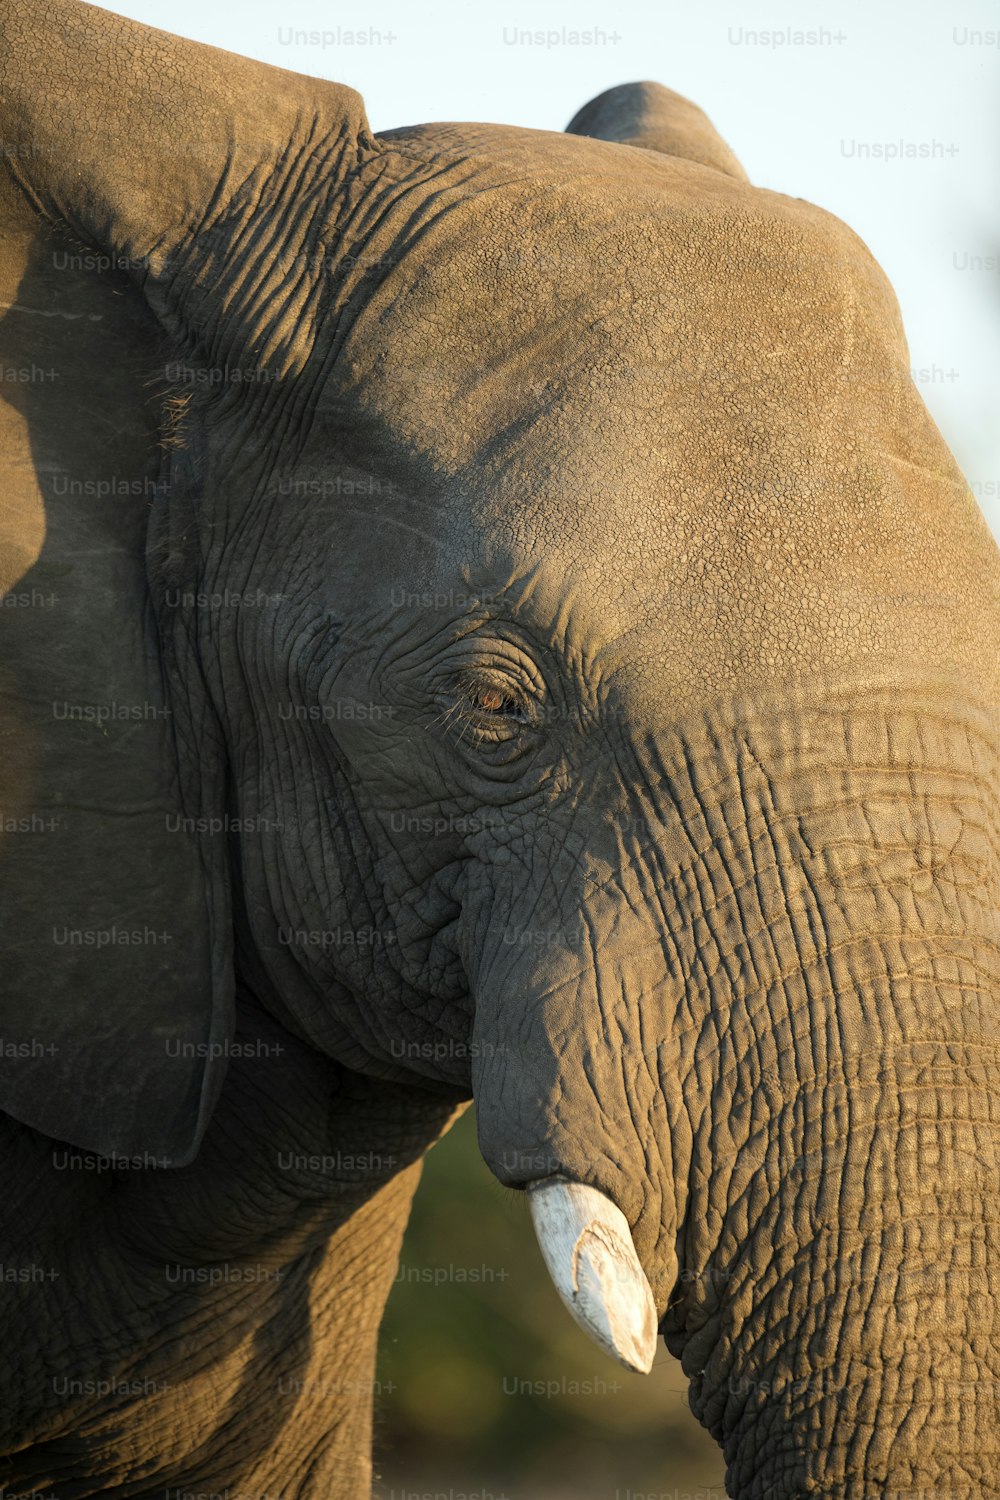 A close up Portrait of an Elephant